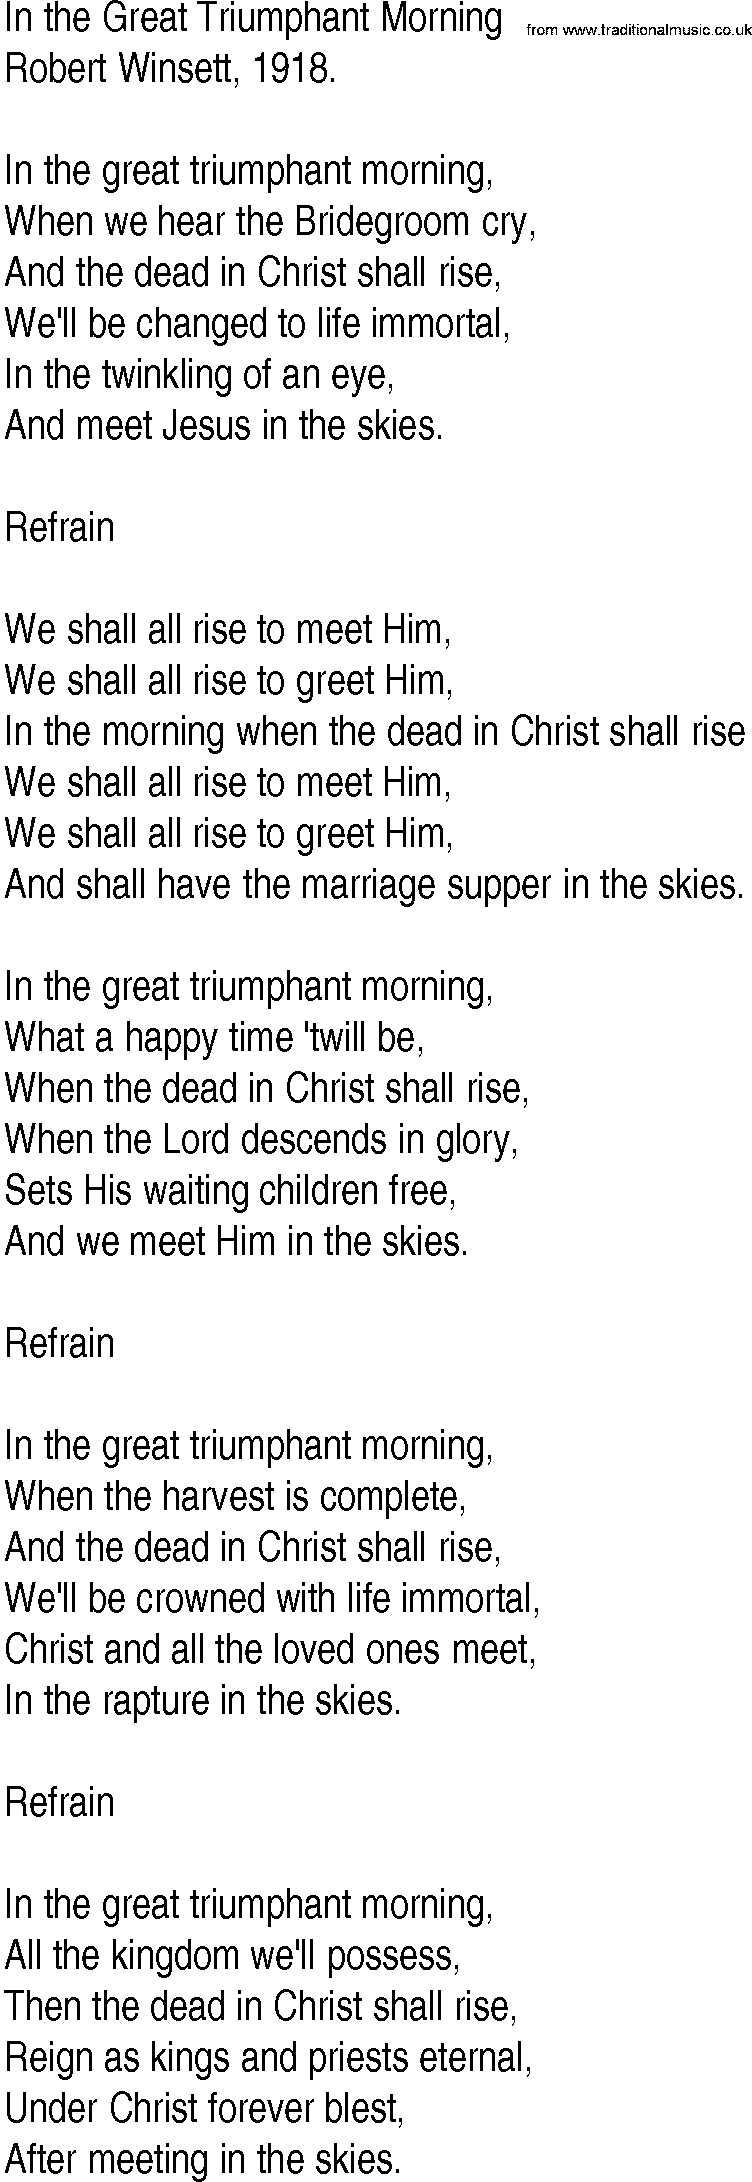 Hymn and Gospel Song: In the Great Triumphant Morning by Robert Winsett lyrics